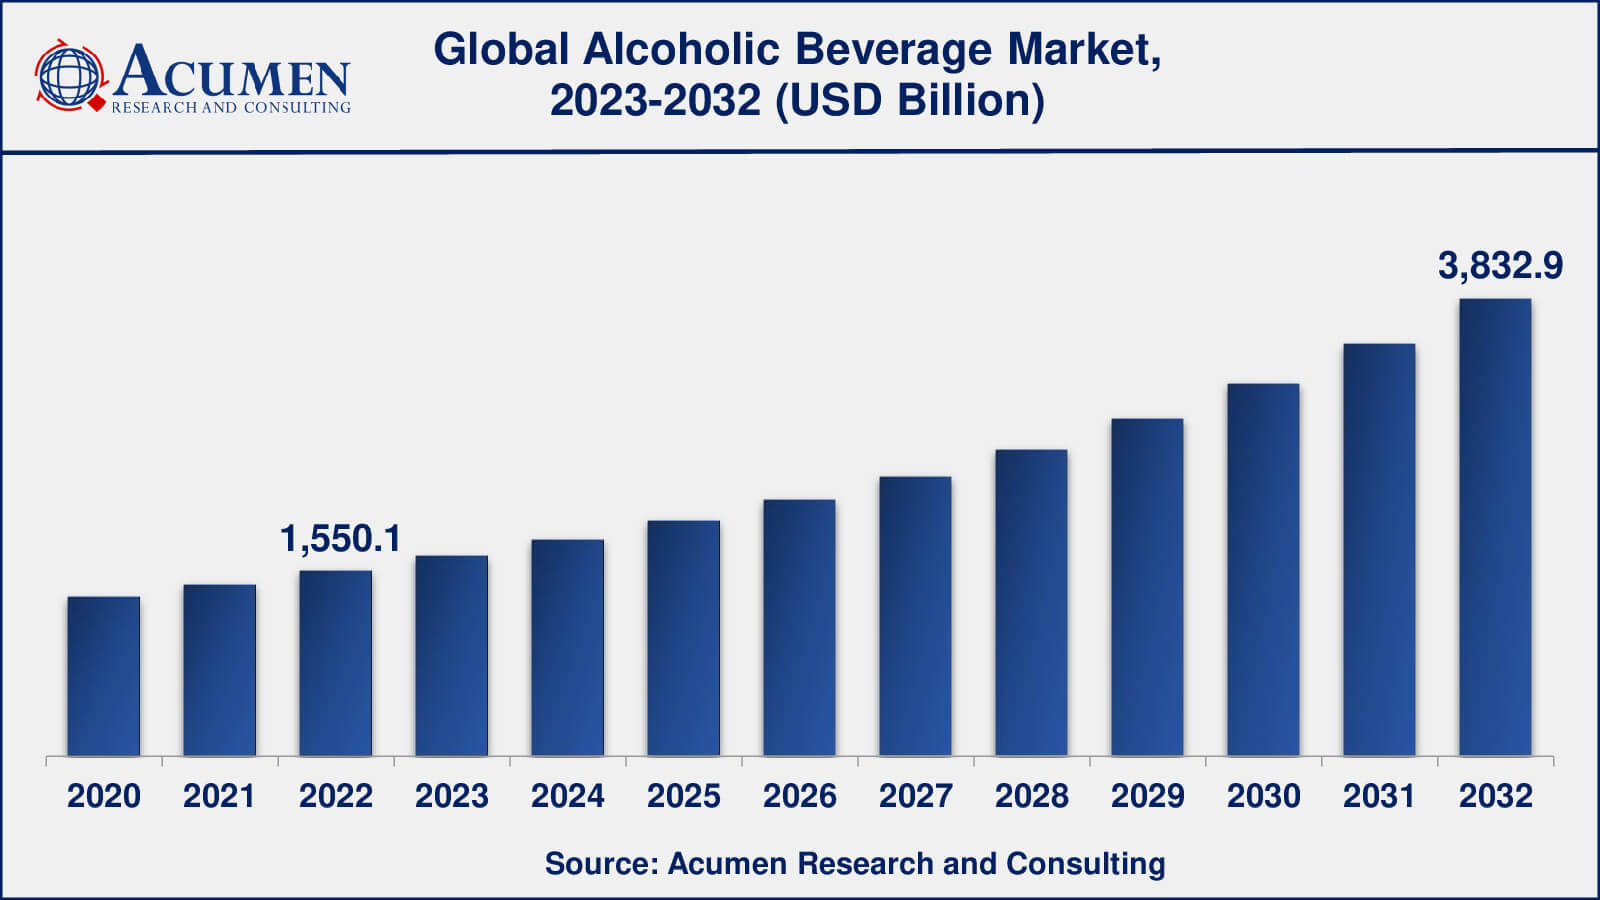 Global Alcoholic Beverage Market Dynamics